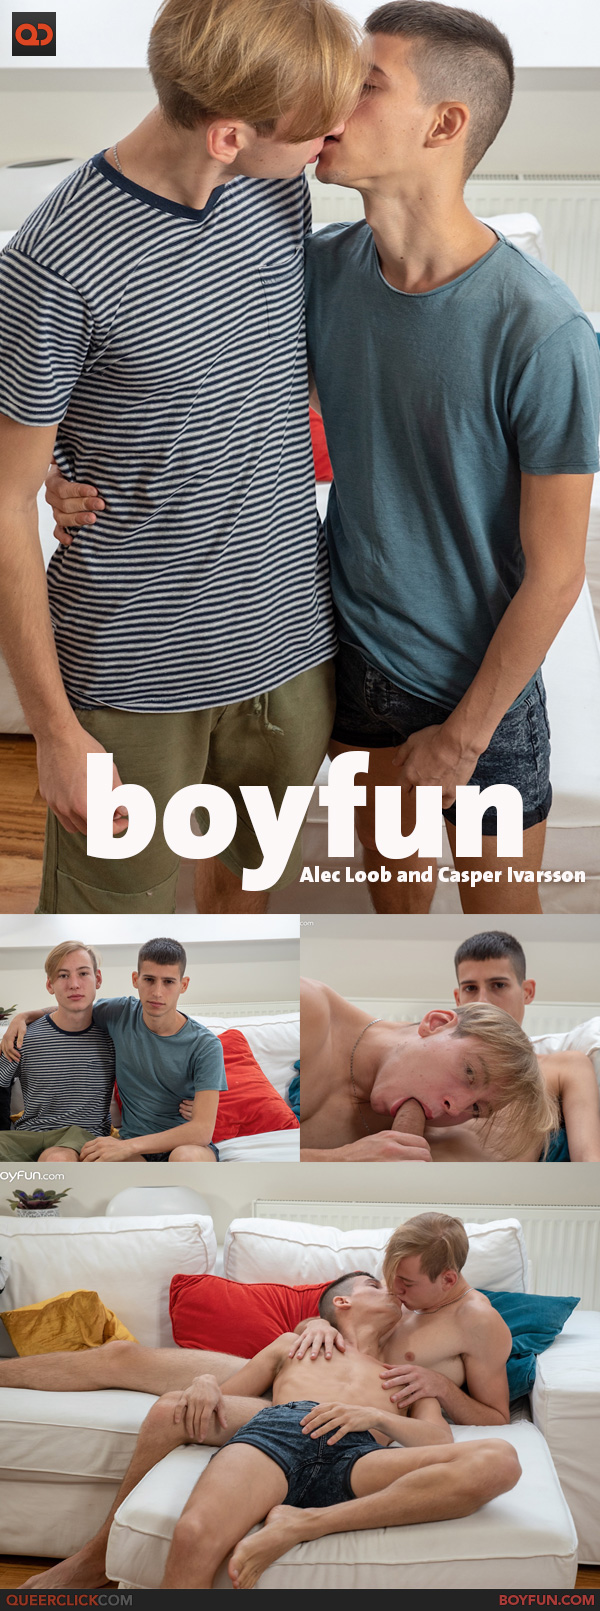 BoyFun: Alec Loob and Casper Ivarsson